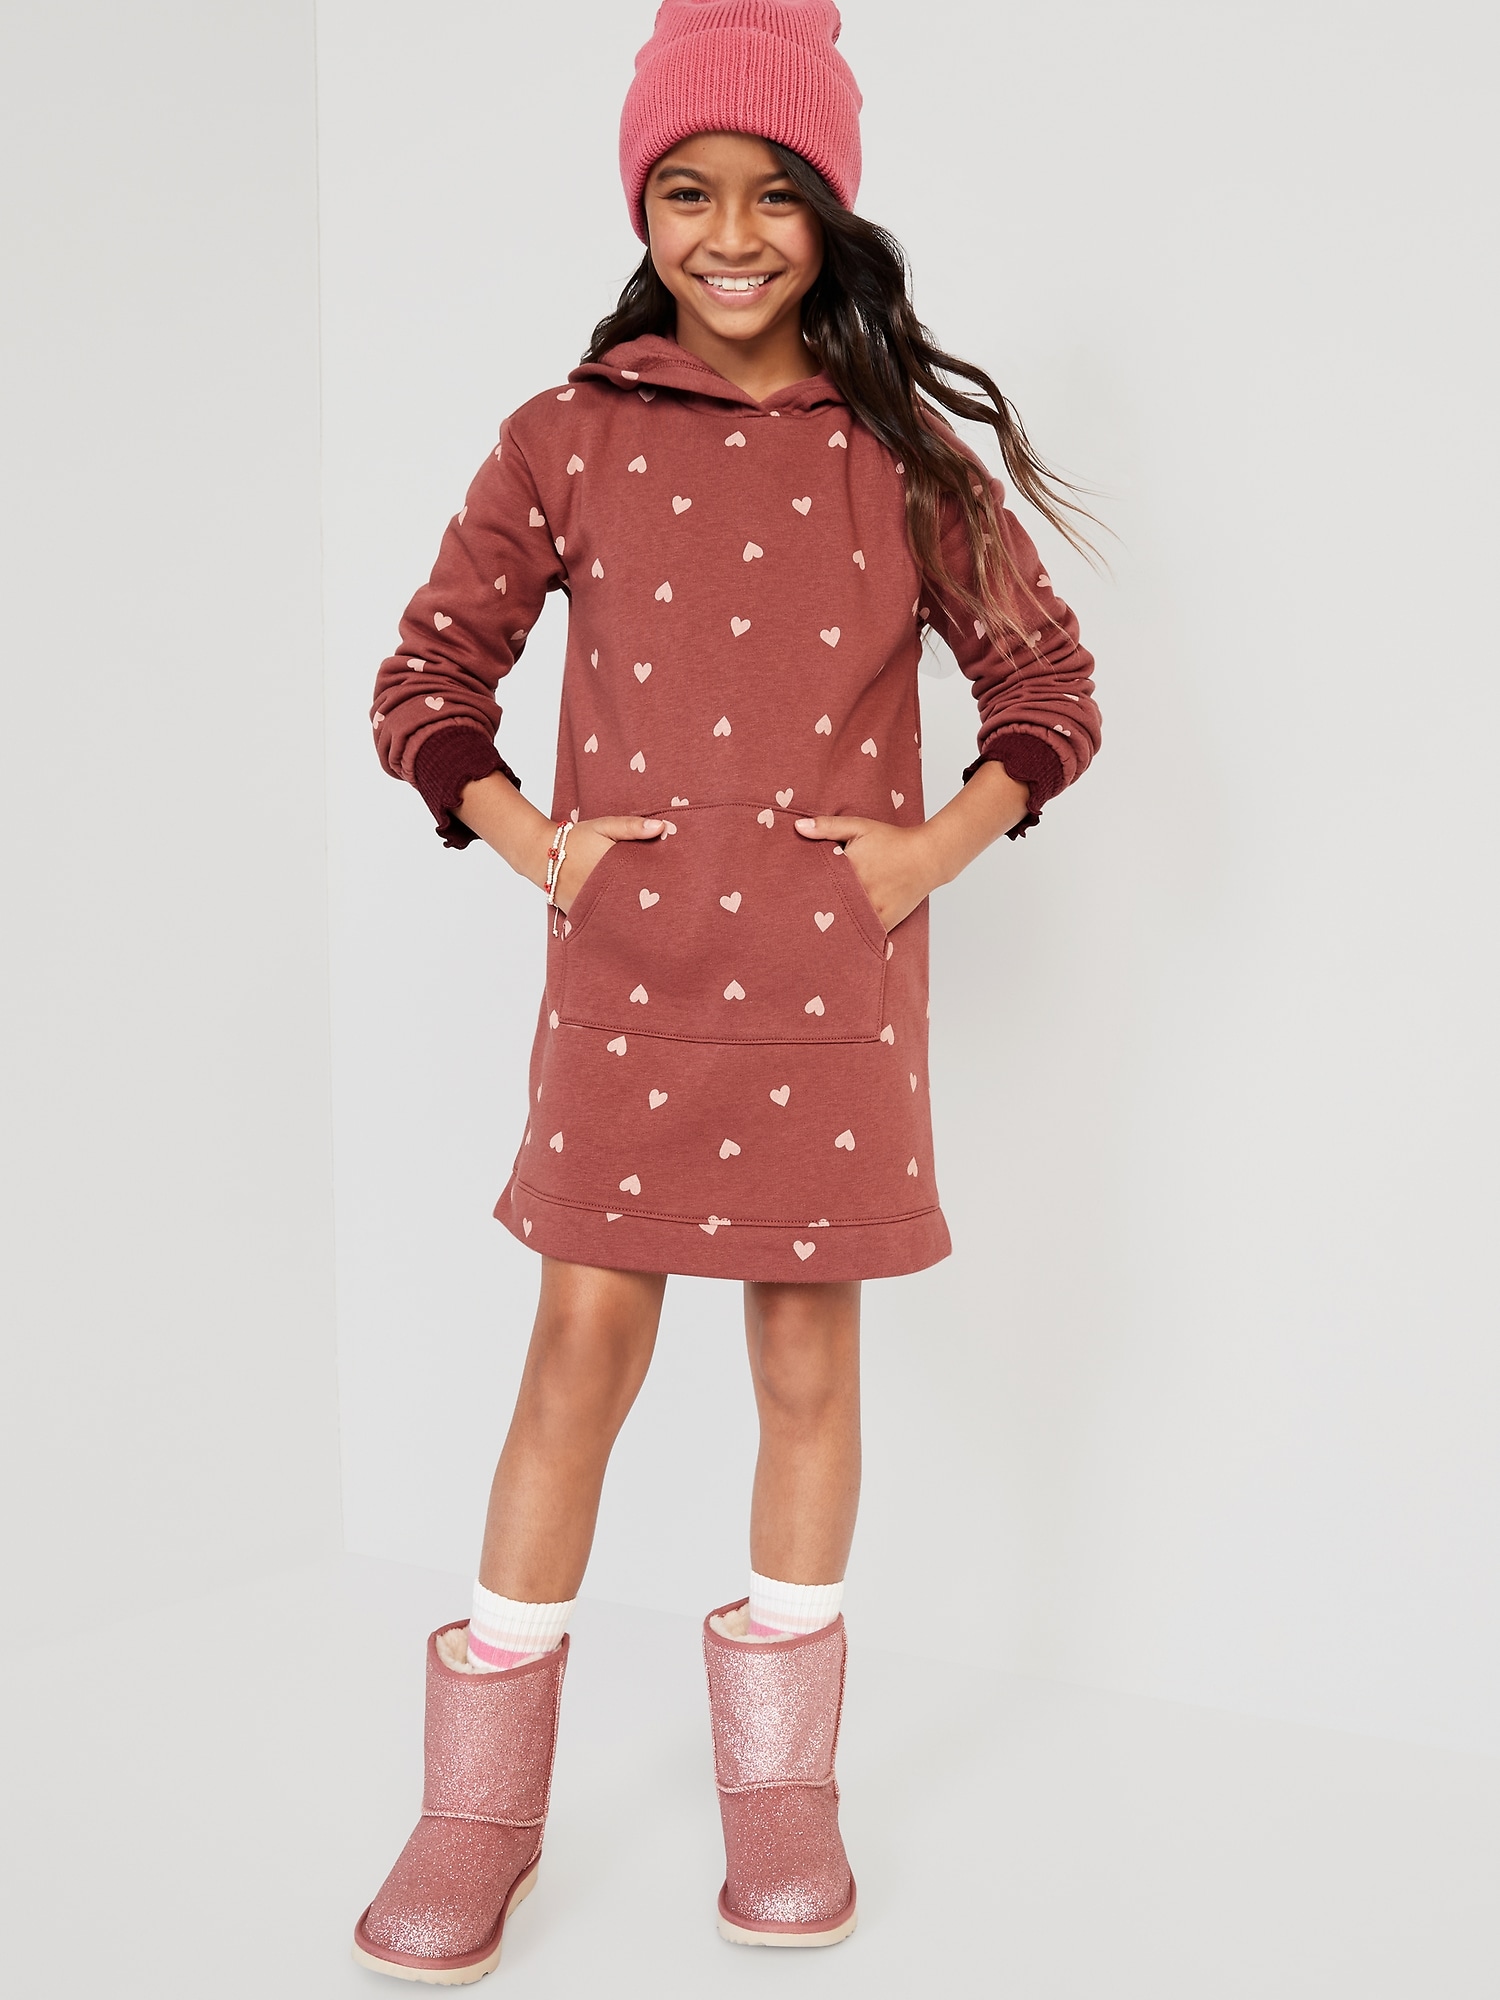 Oldnavy Long-Sleeve Hooded Sweatshirt Dress for Girls